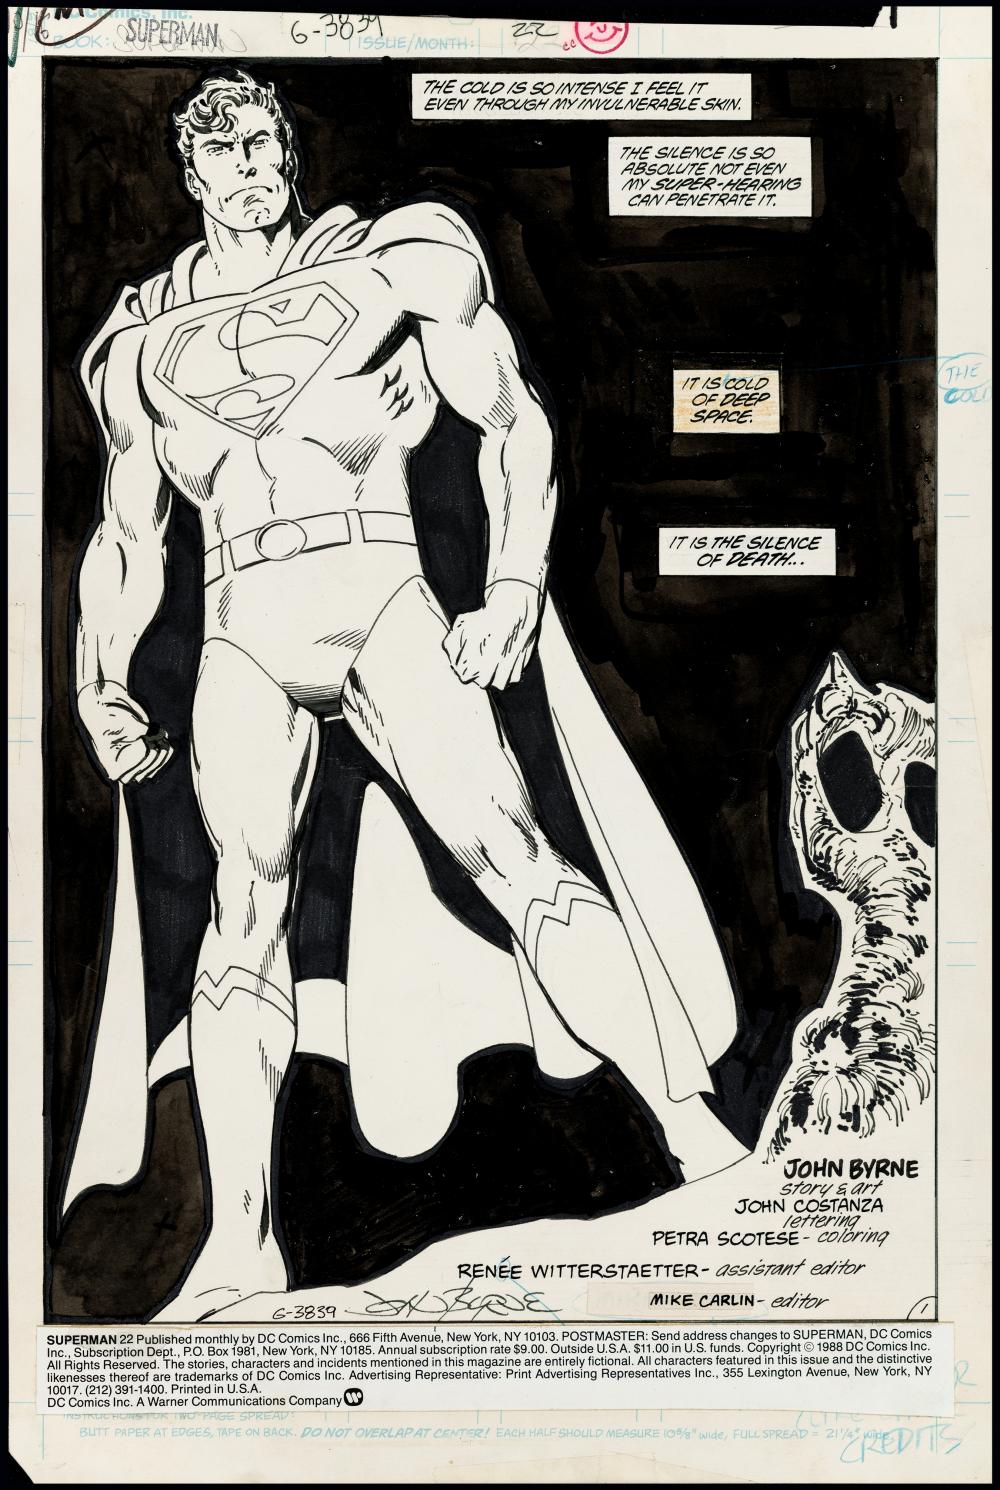 Image: Superman #22 Title splash art by John Byrne